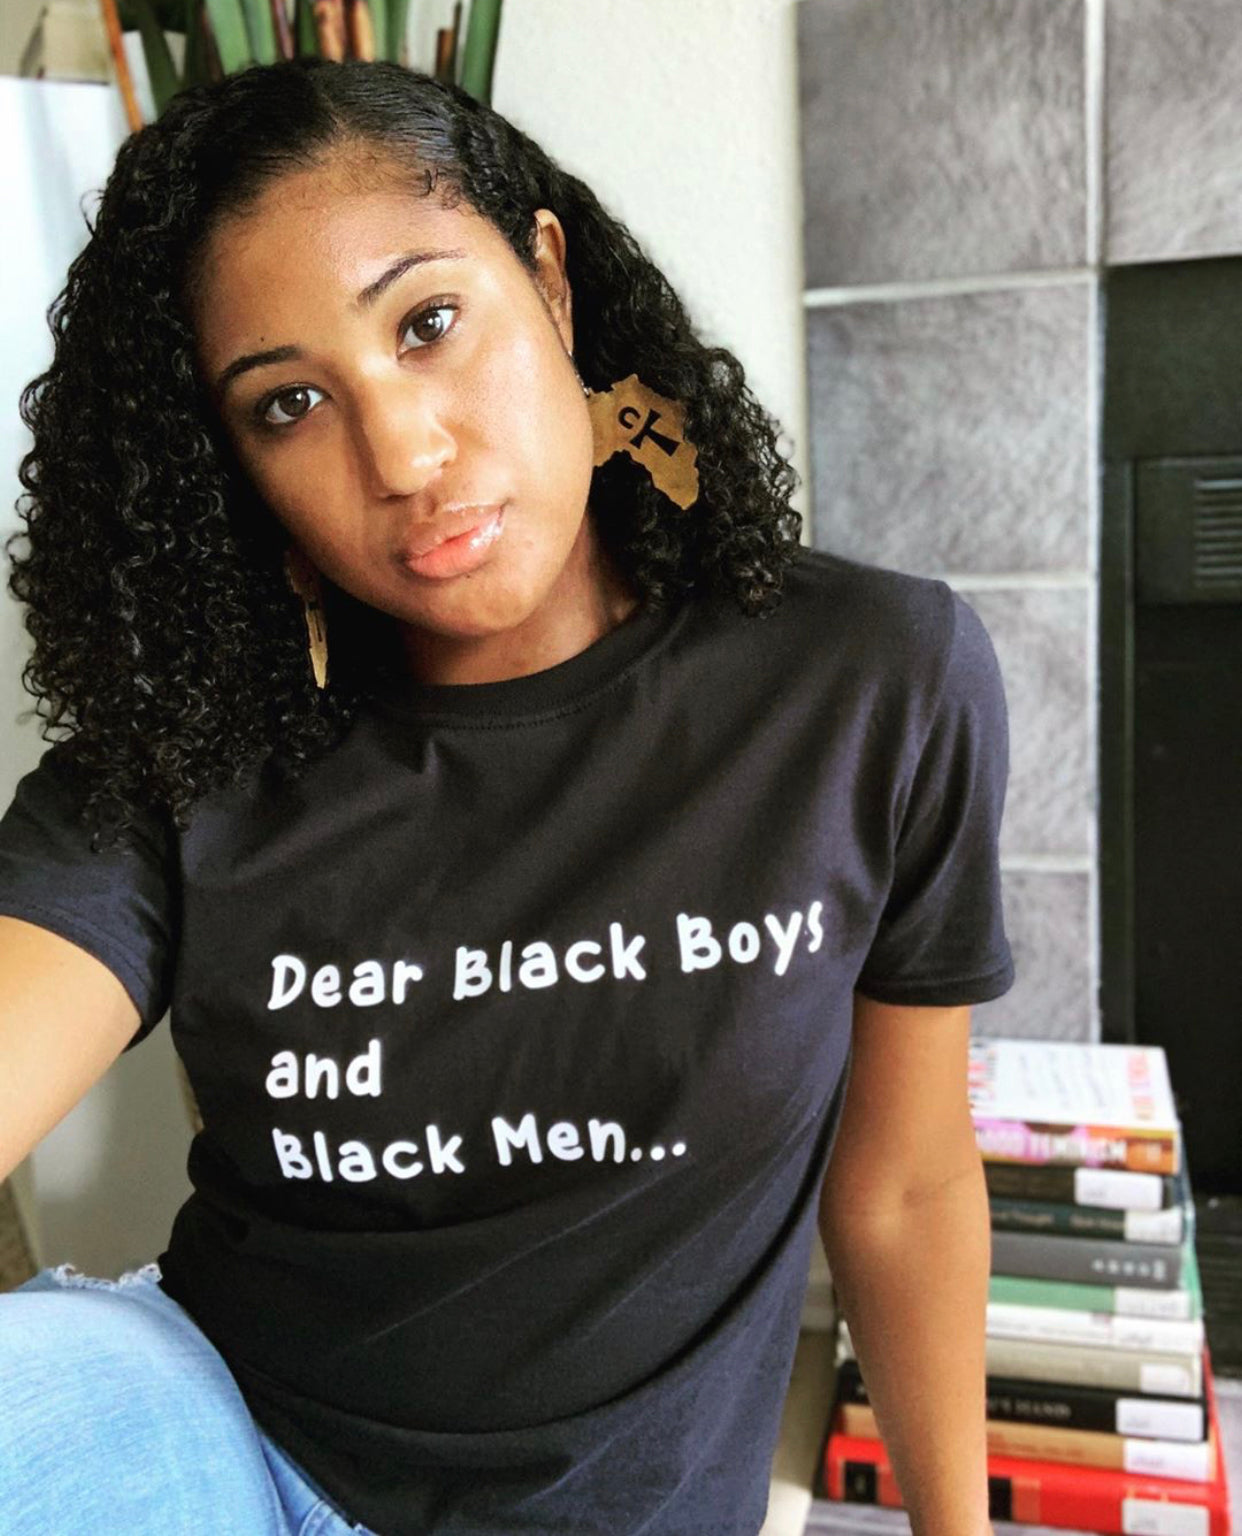 "Dear Black Boys and Black Men" Short Sleeve (ADULTS)